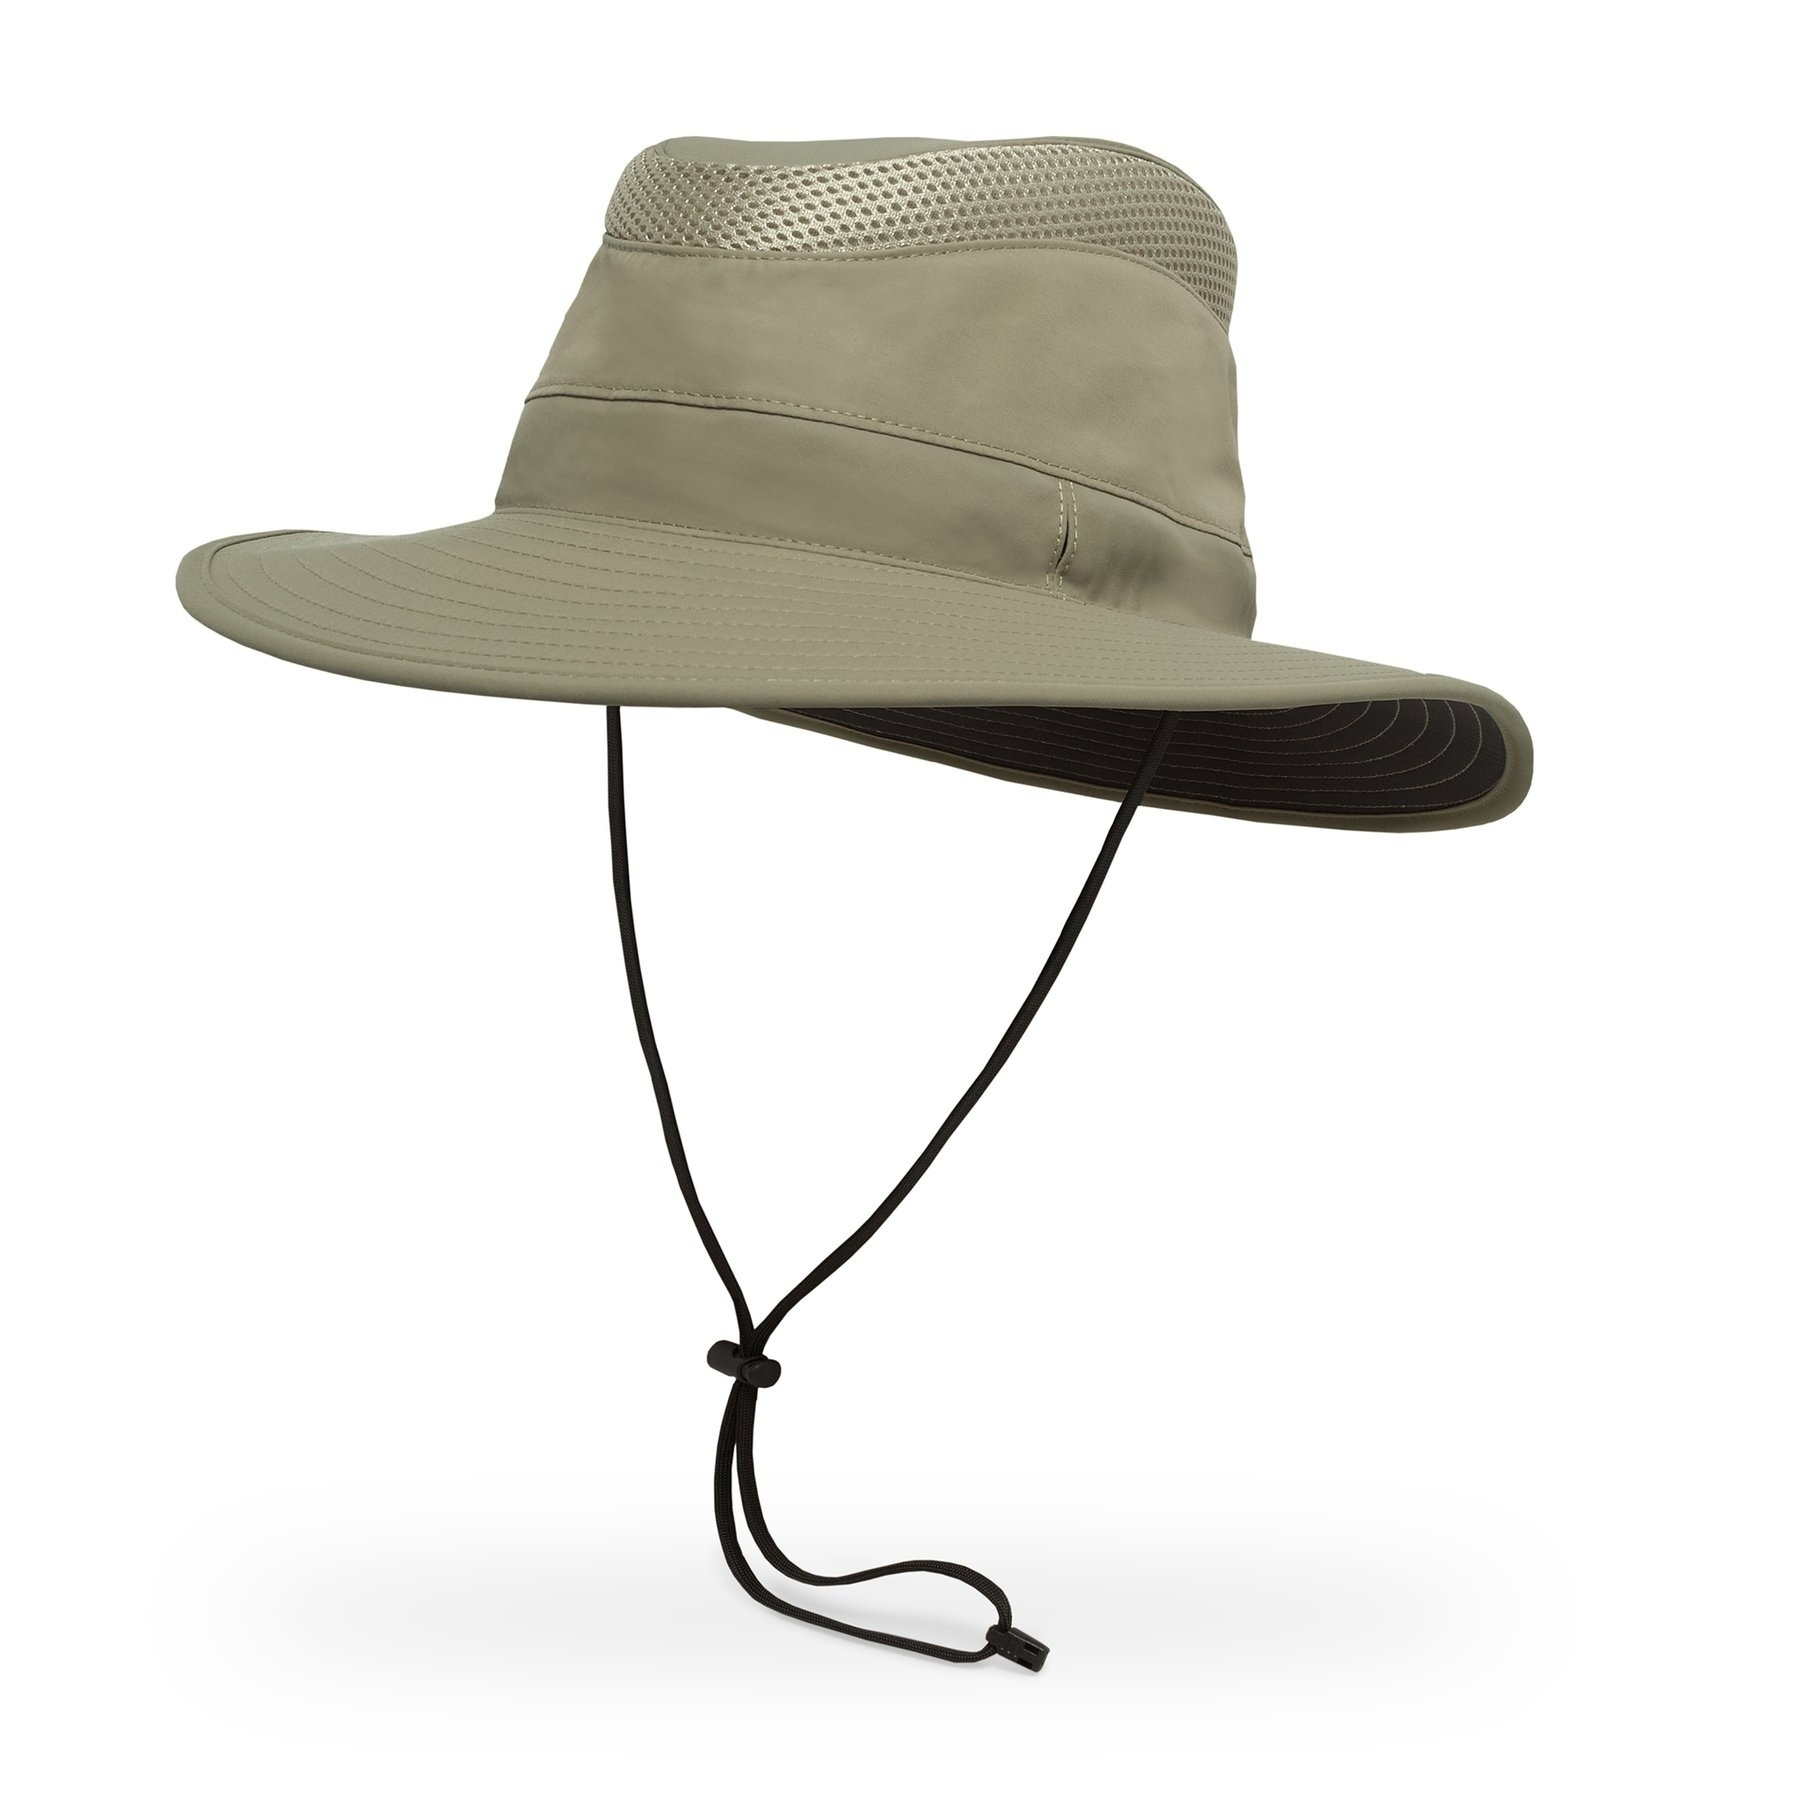 Charter hat sand m (medlight)